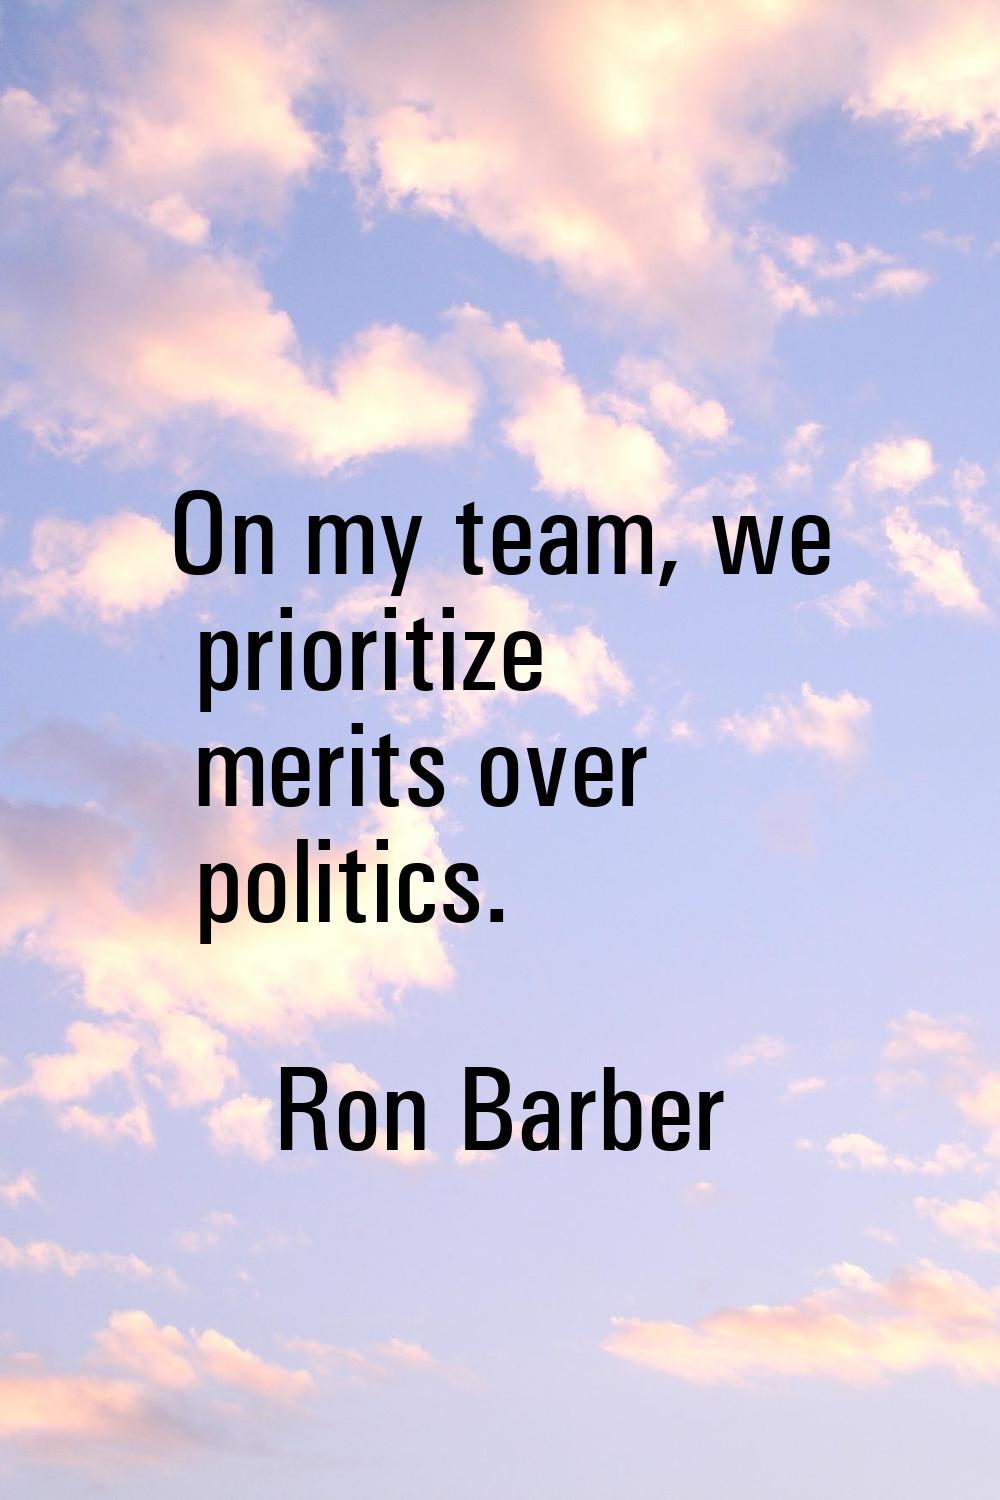 On my team, we prioritize merits over politics.